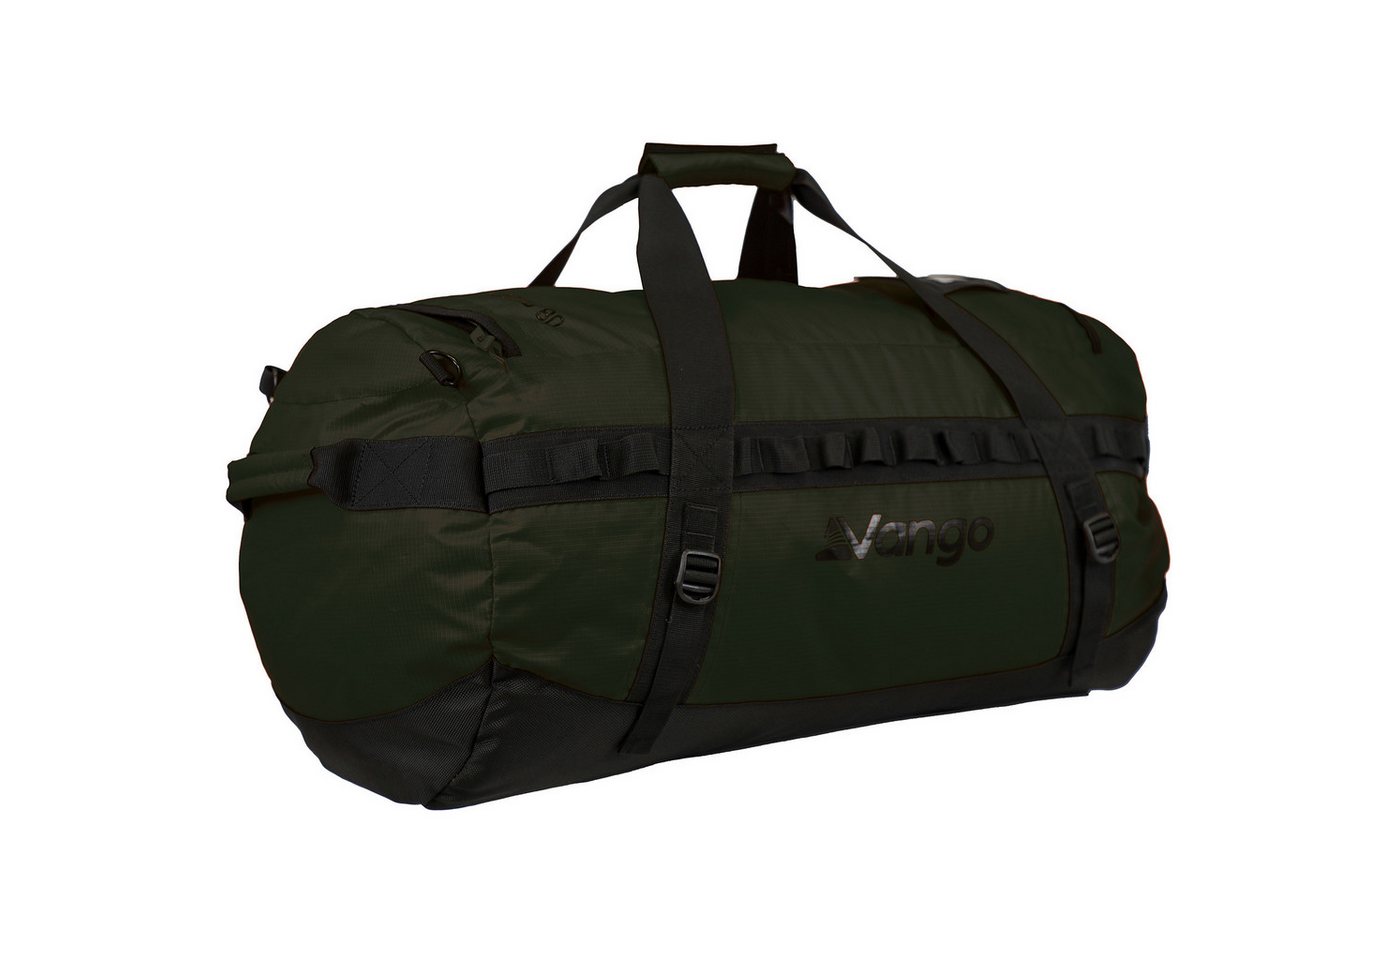 Vango Trekkingrucksack Reisetasche Cargo 80 Duffle Bag Camping, Rucksack Transport Tasche Tragbar von Vango